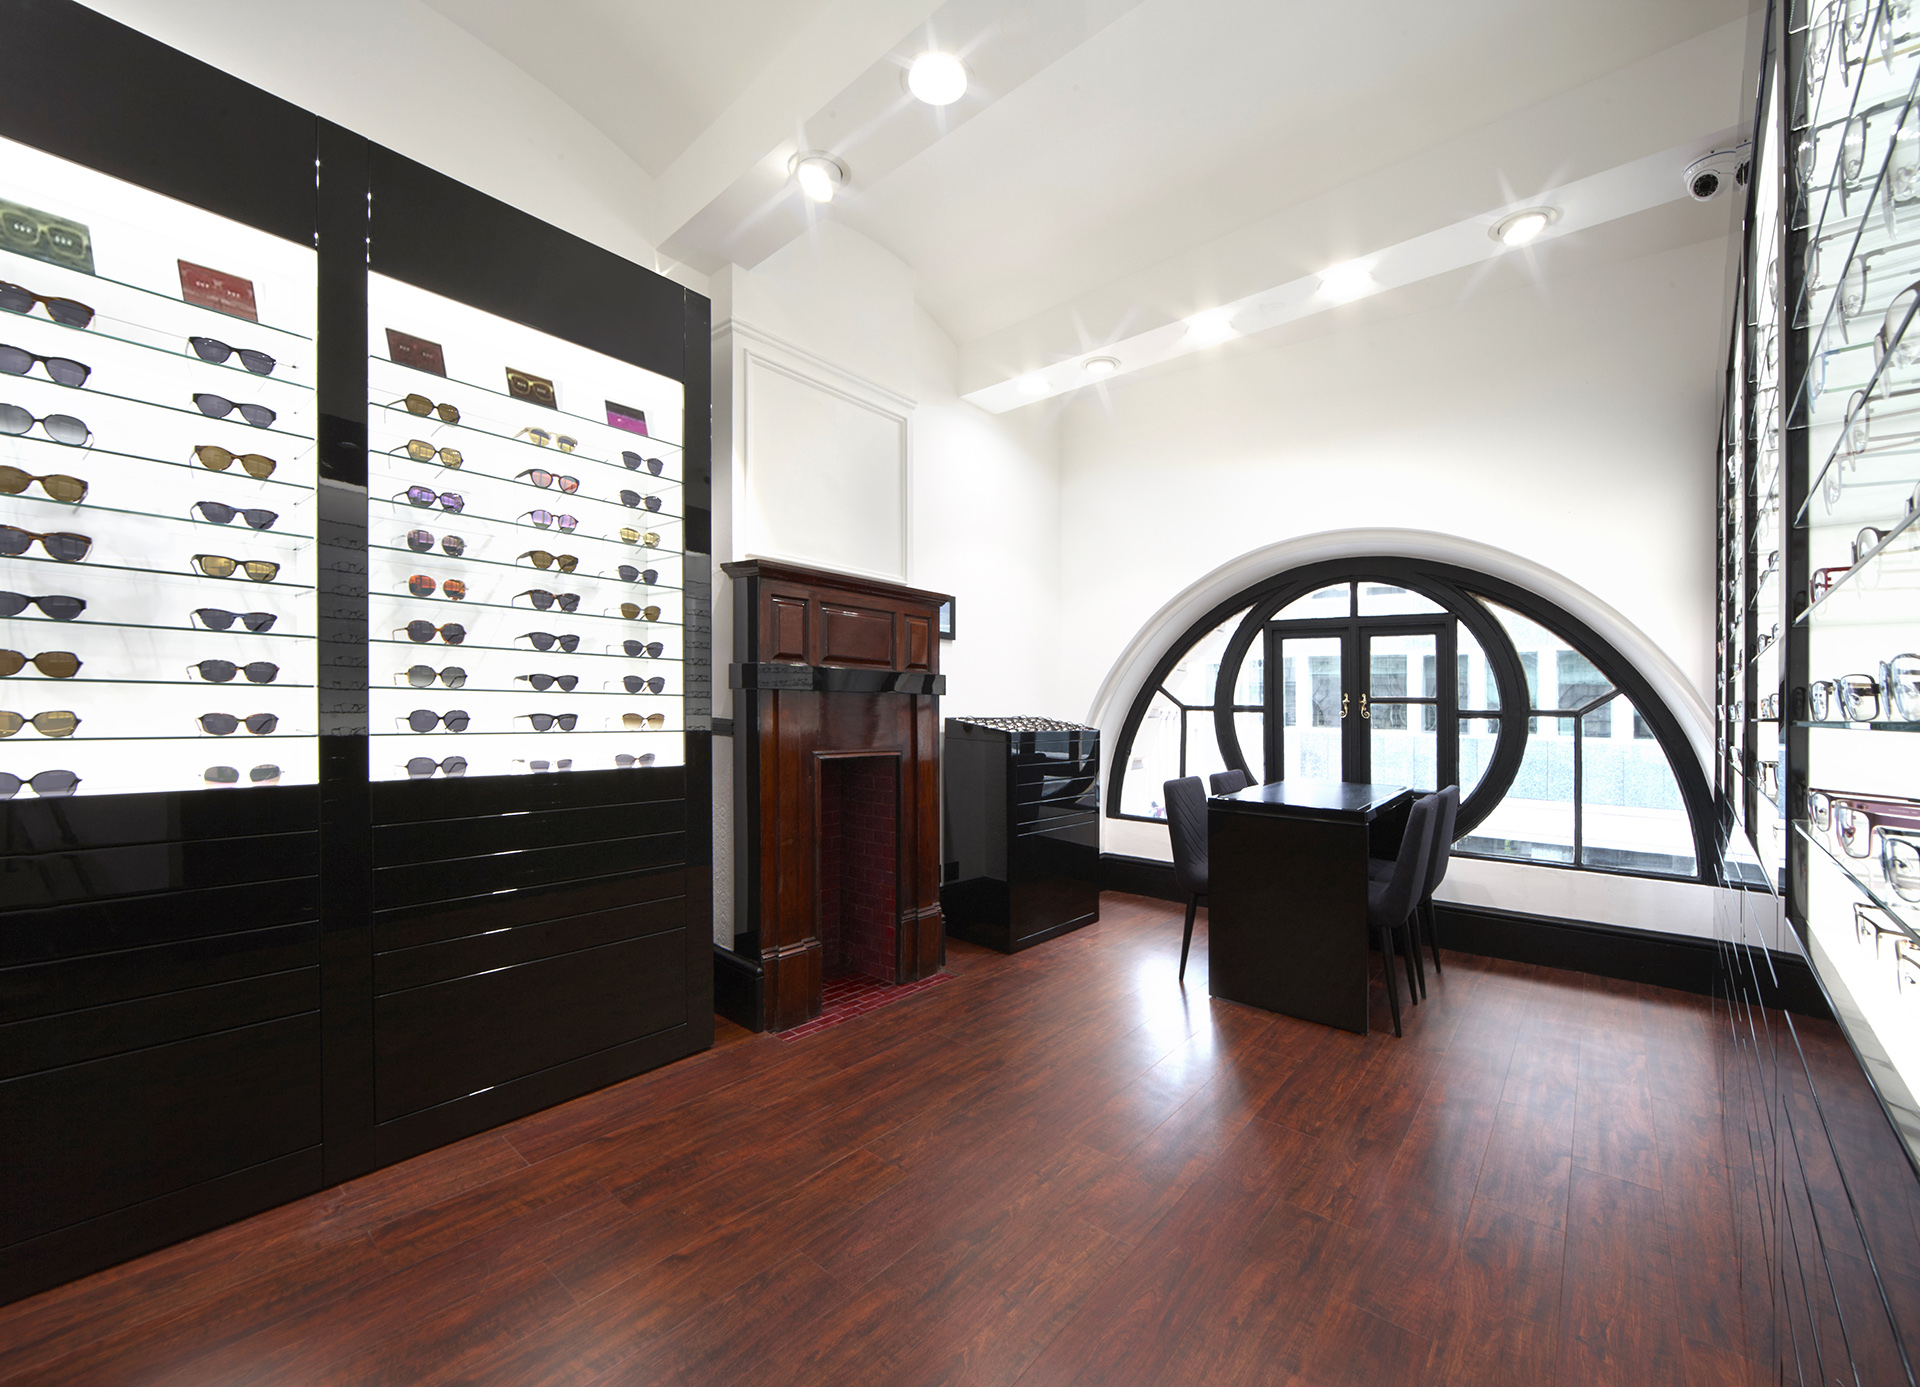 Shop floor of Tom Davies Bespoke Opticians in Royal Exchange, City of London